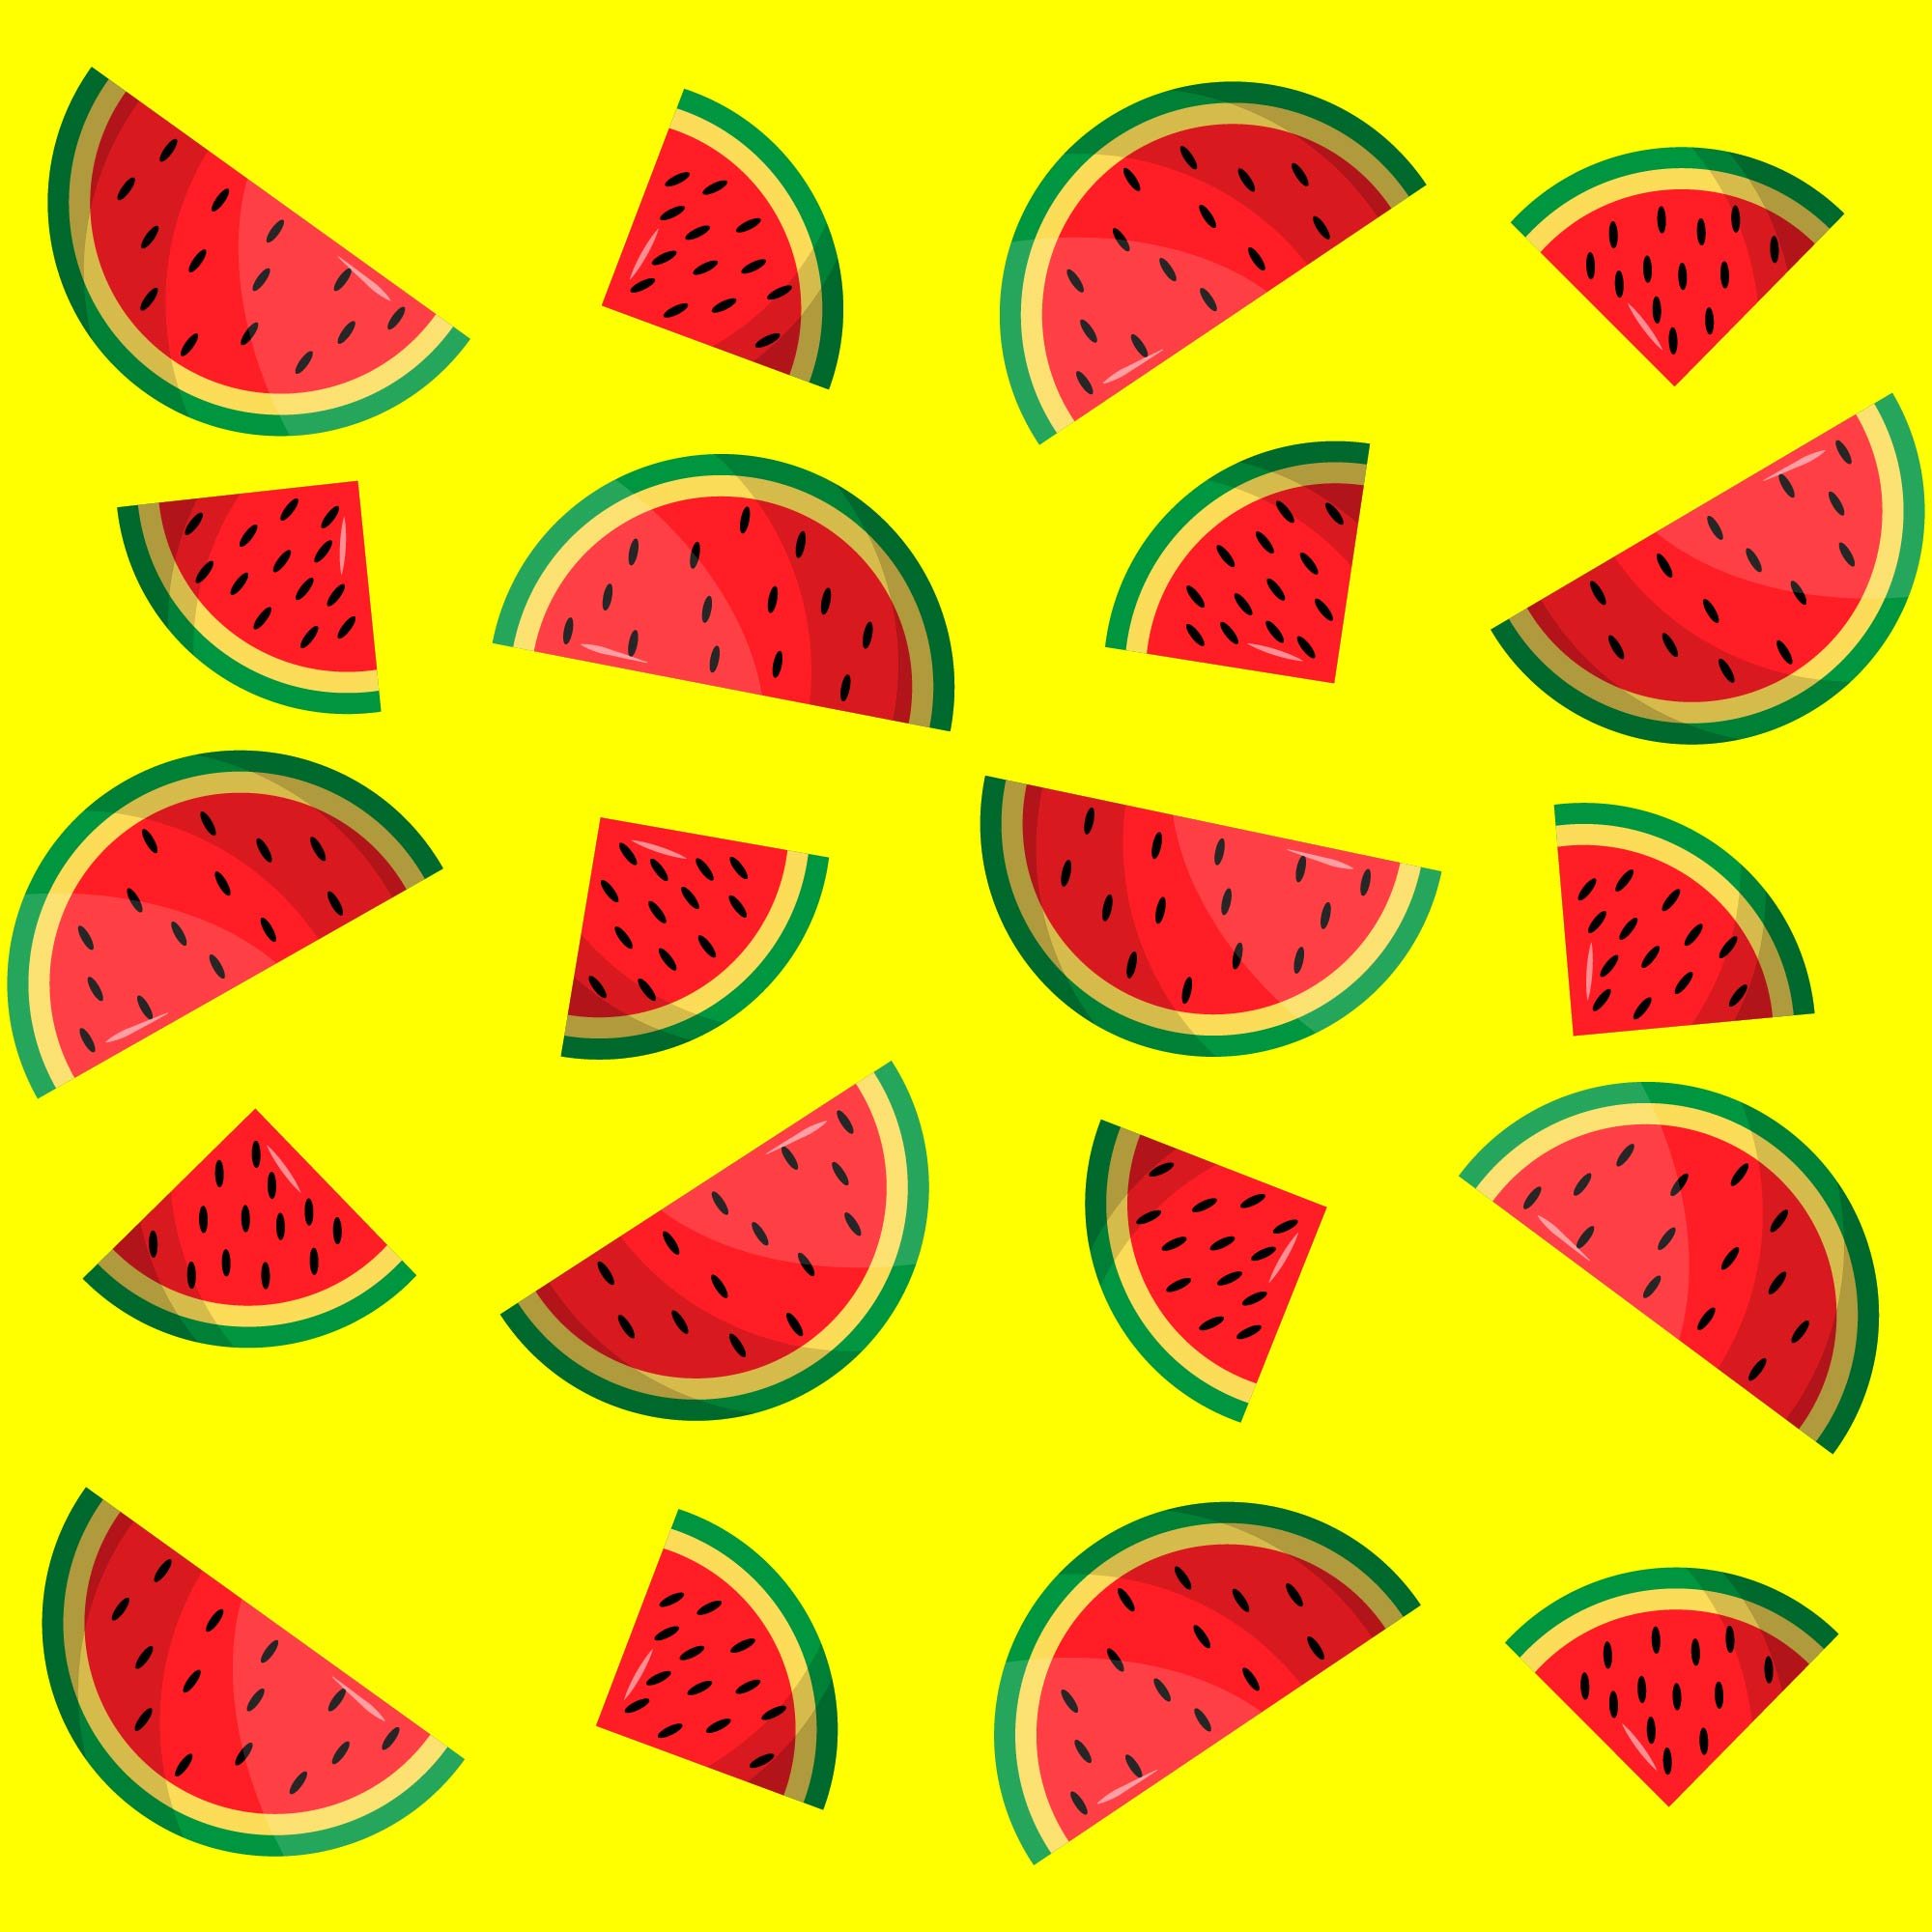 Watermelon cover image.